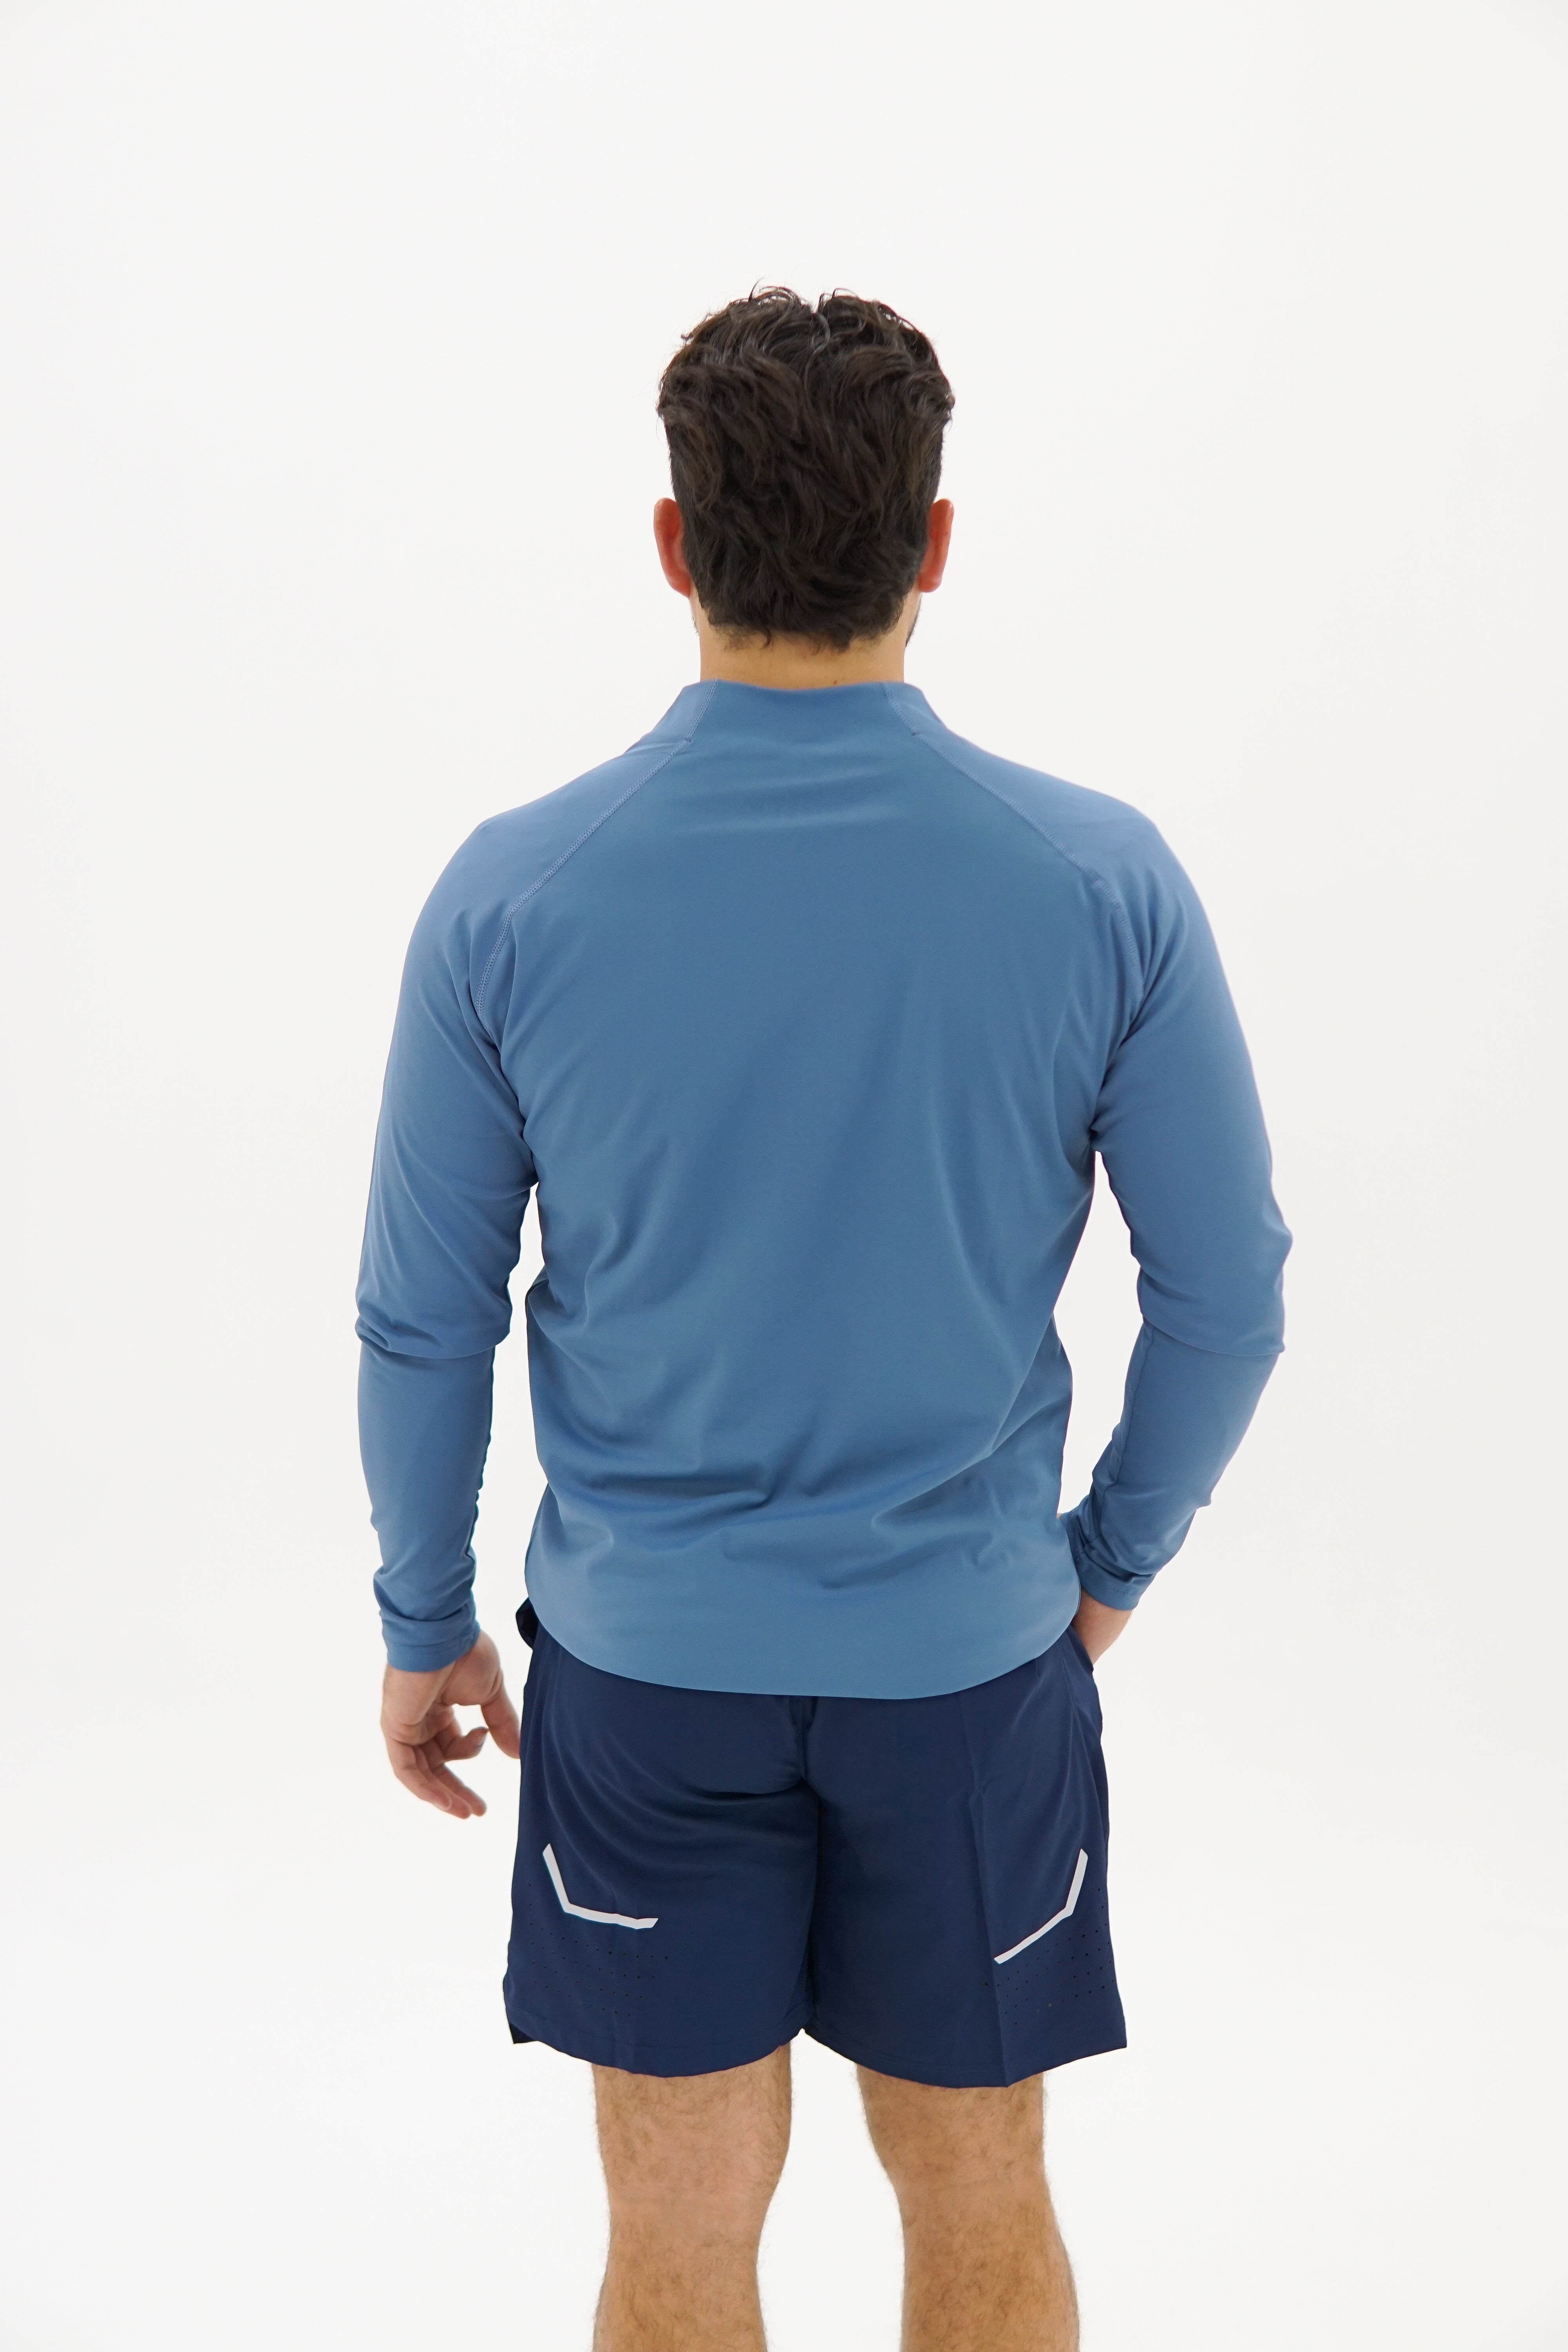 Sport Tech Performance Sweater - Azul Claro